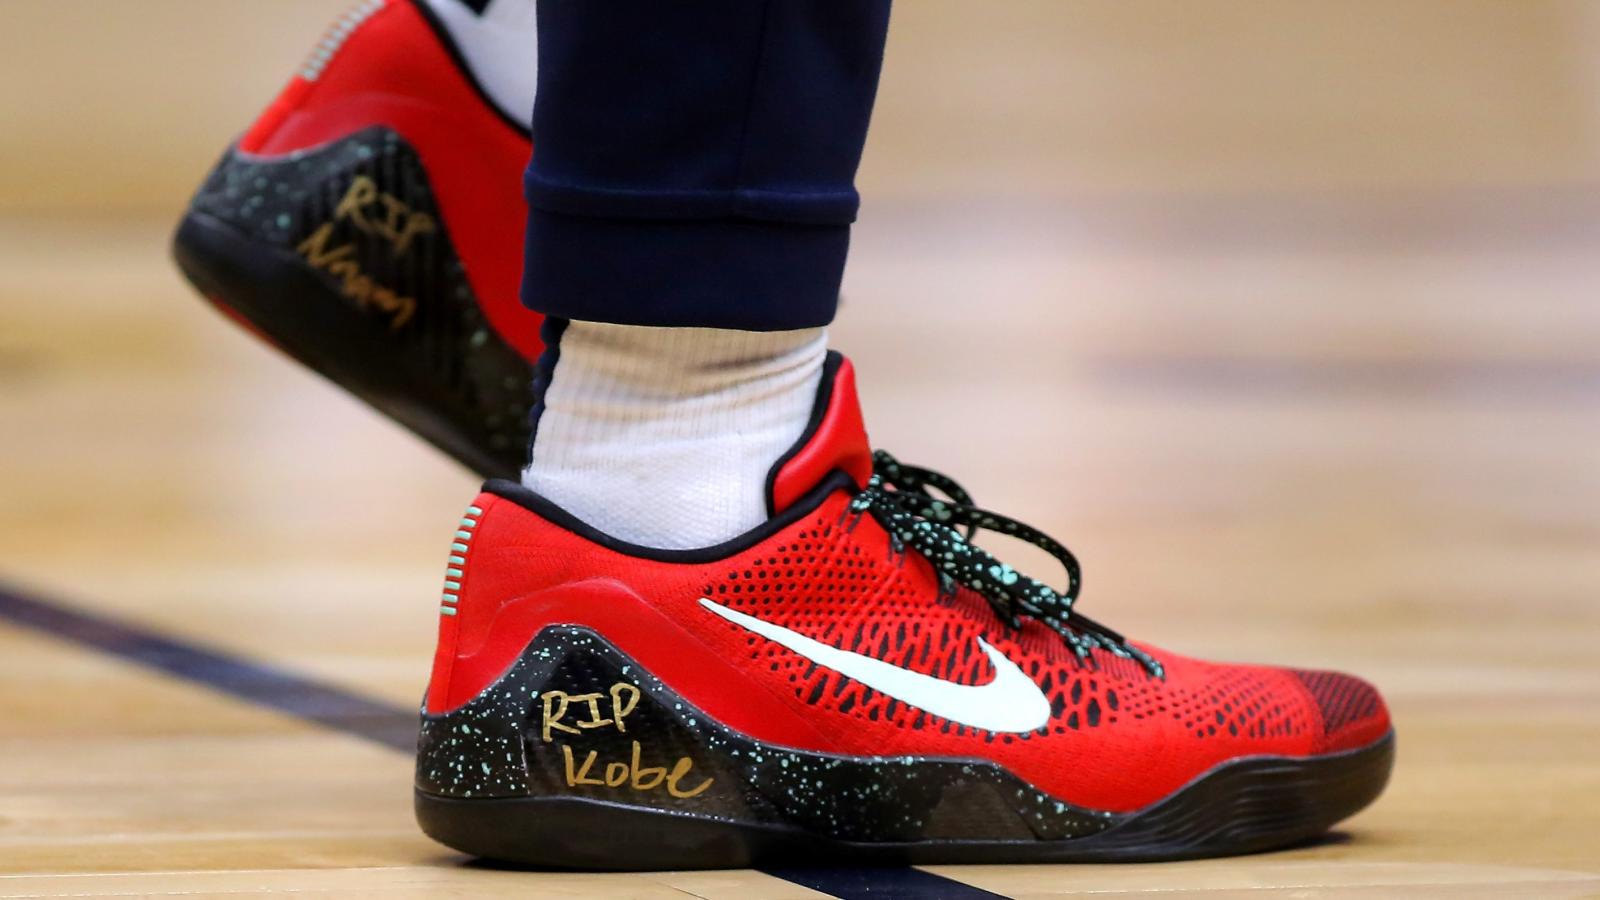 How NBA players paid tribute to Kobe Bryant